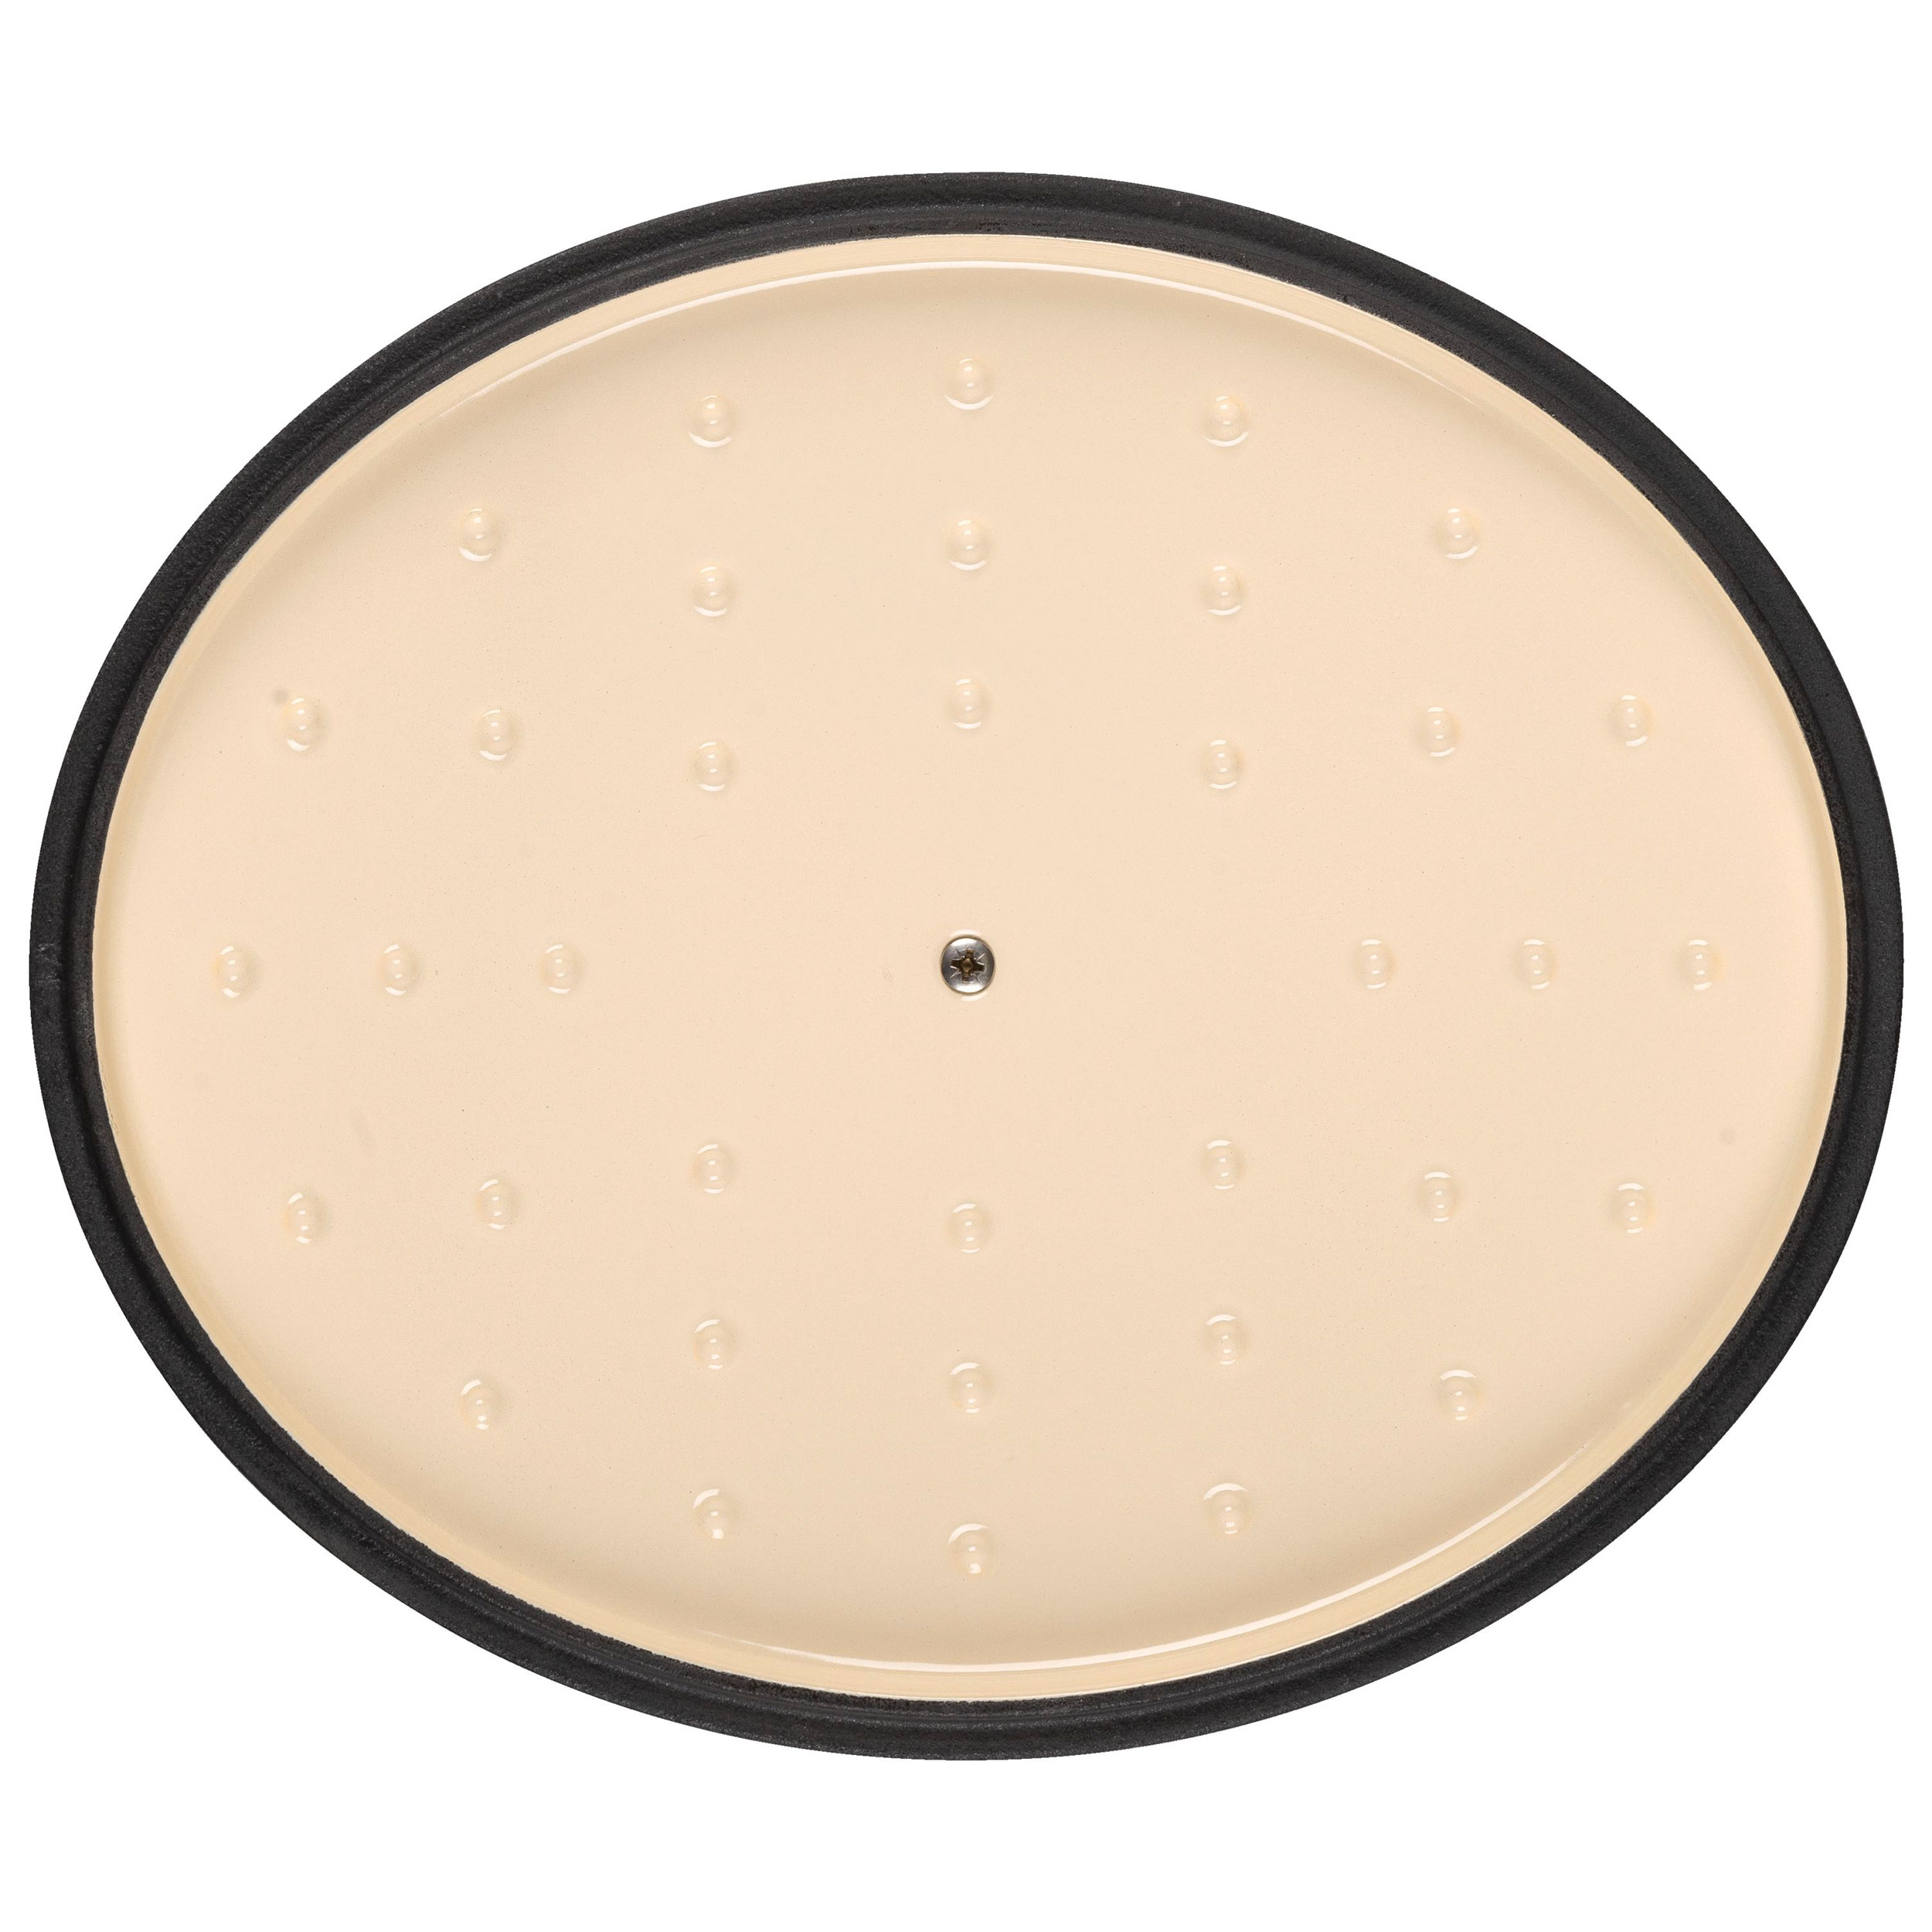 Cocotte oval 4,5l 29cm image number null